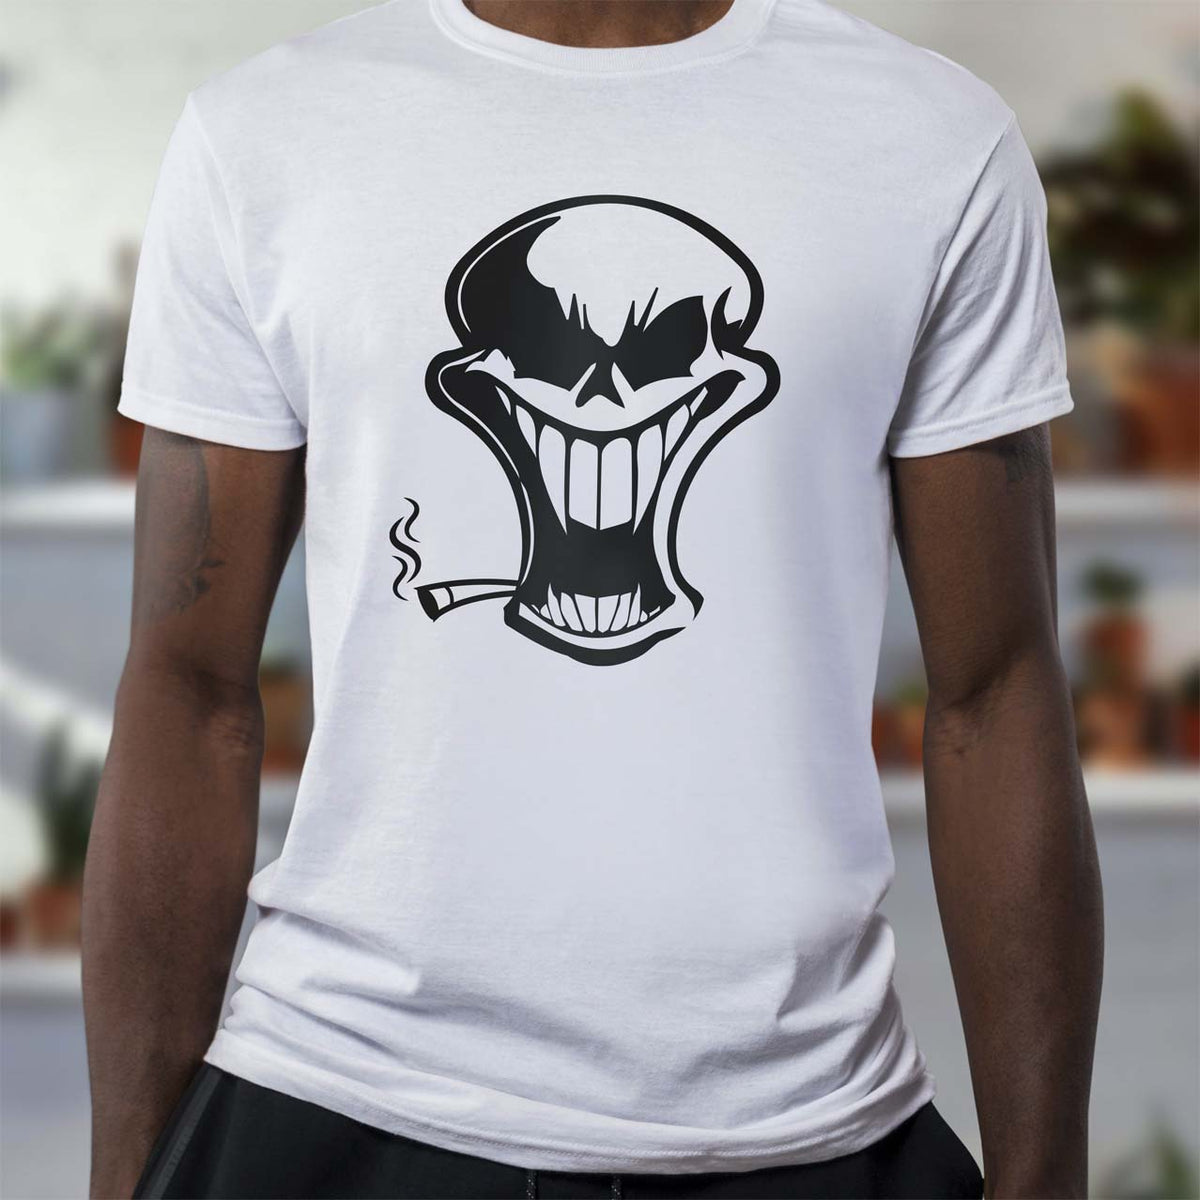 Joker Smoking Skull Car Club Unisex T-Shirt by Bad Investments Auto